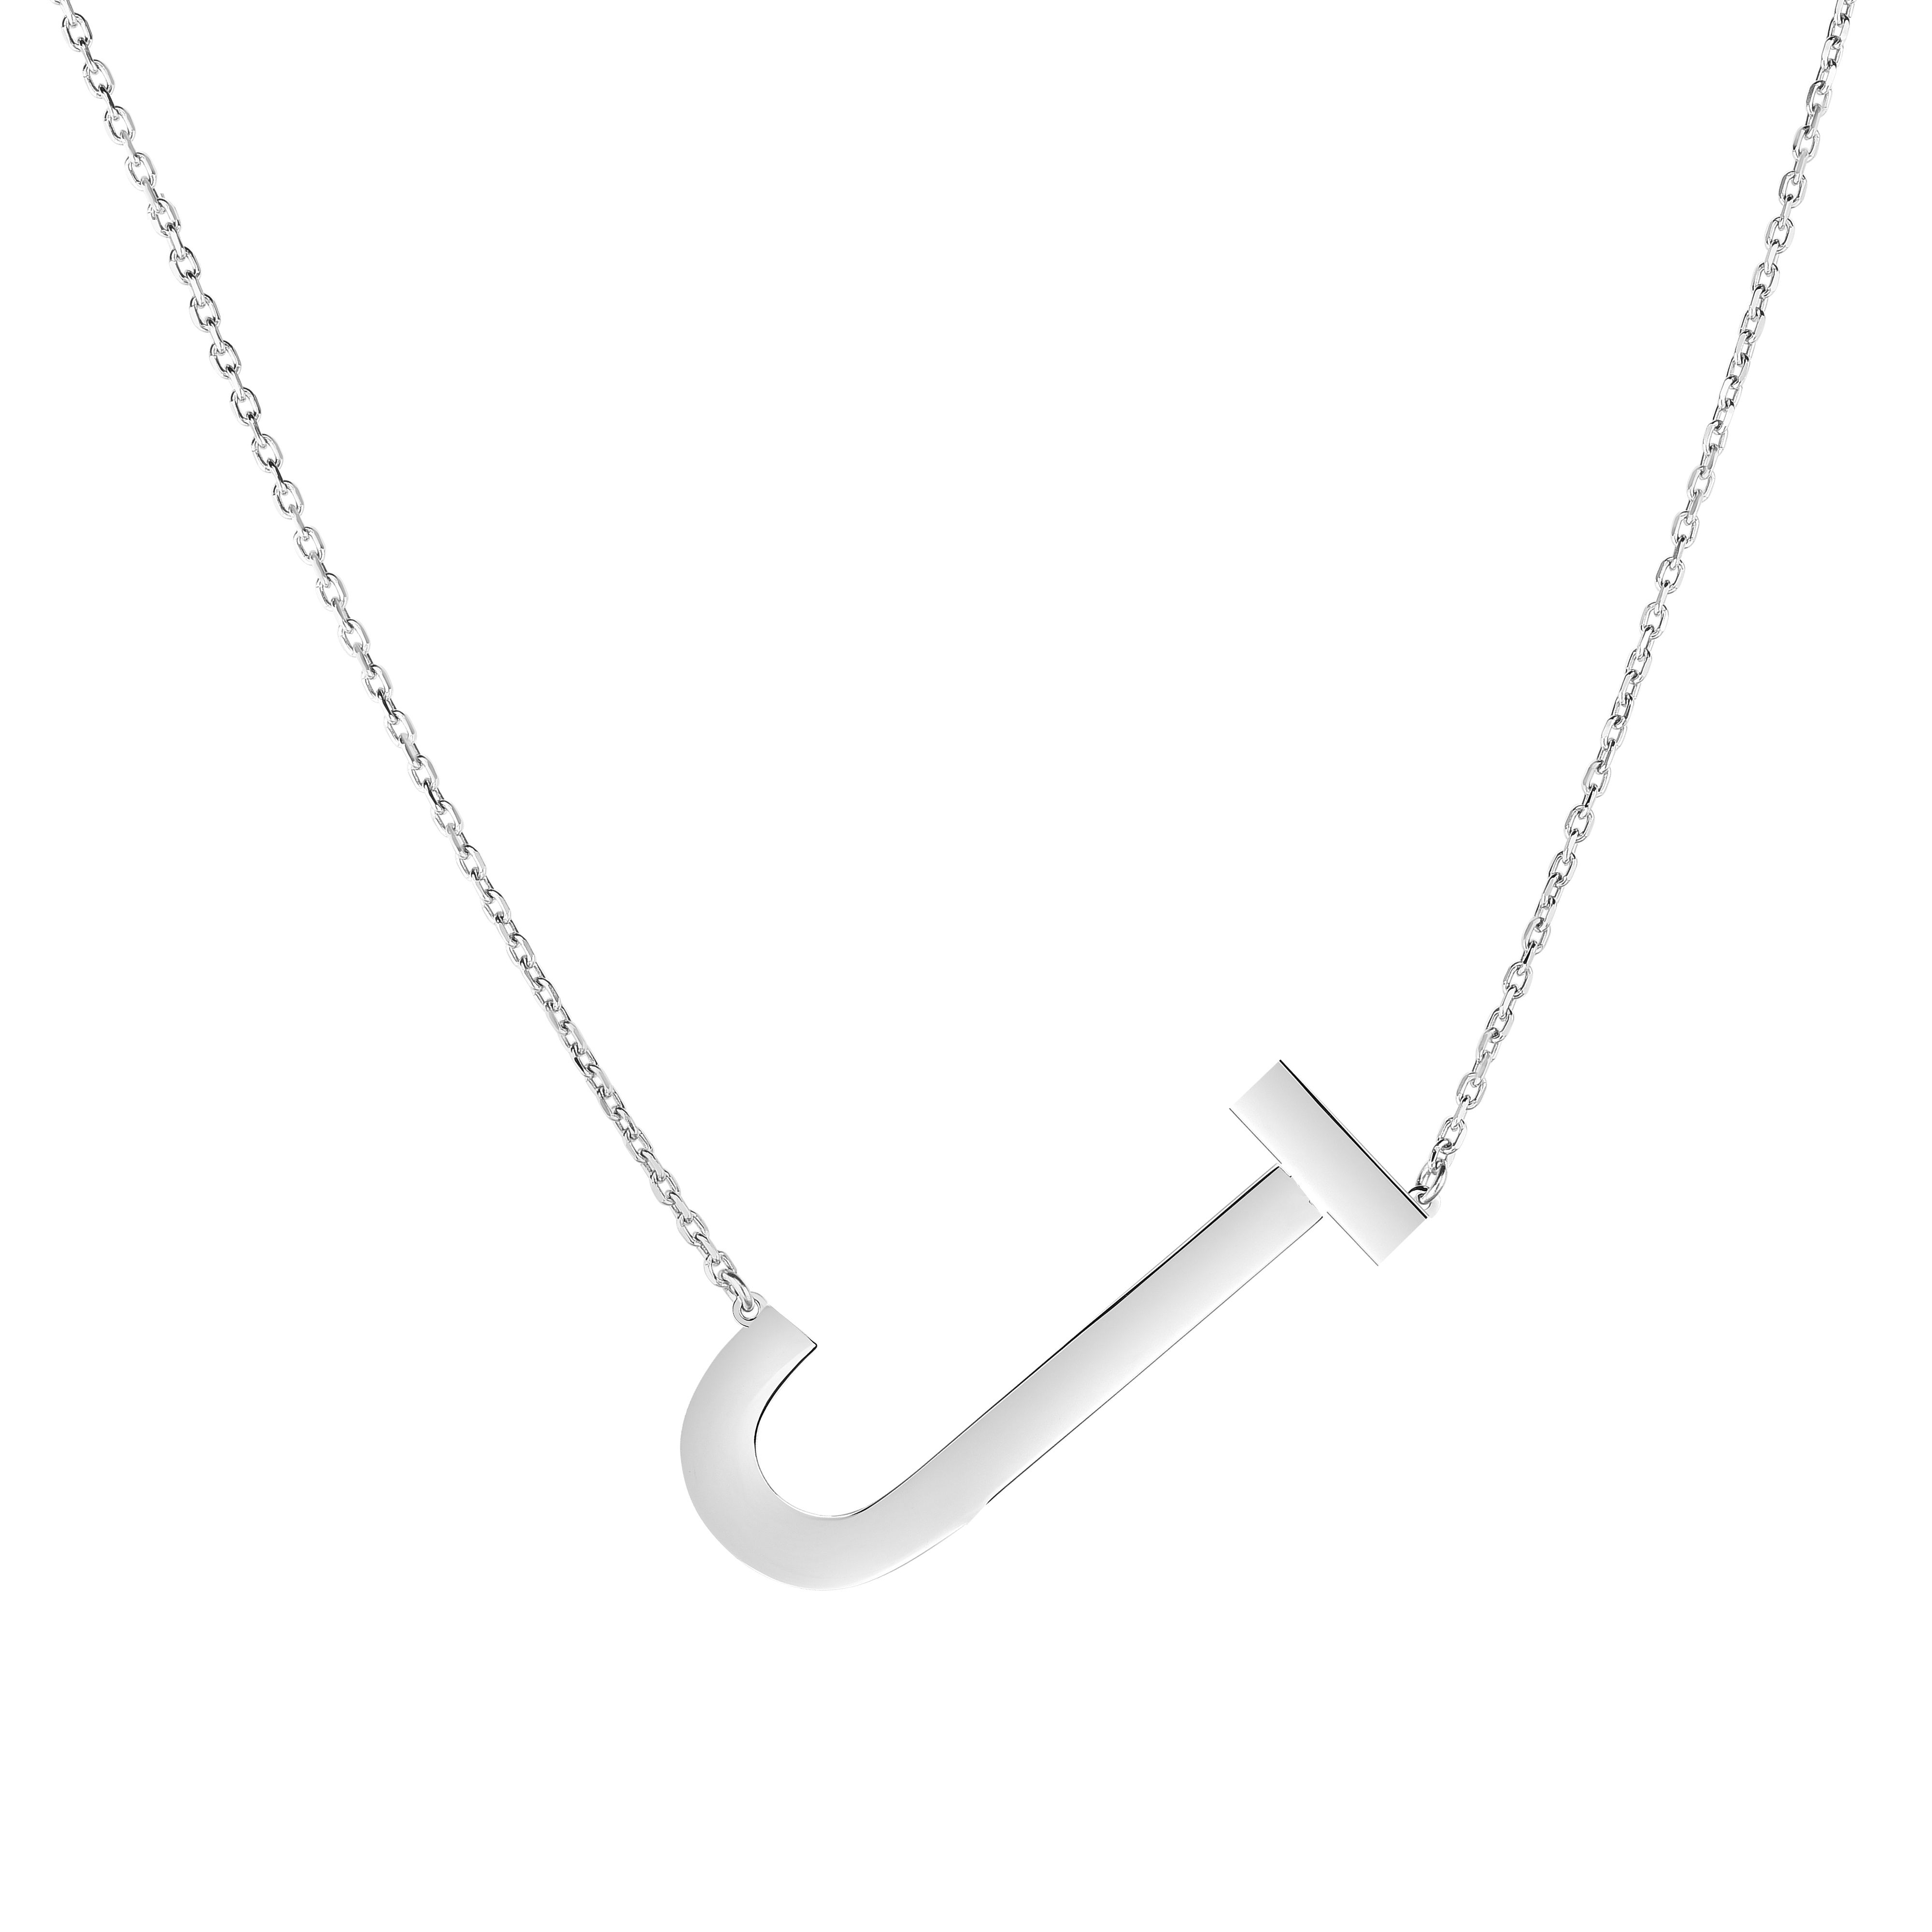 Letter Alphabet Initial Medium Heart Pendant Necklace Sterling Silver |  Heart pendant necklace, Initial pendant necklace, Heart pendant